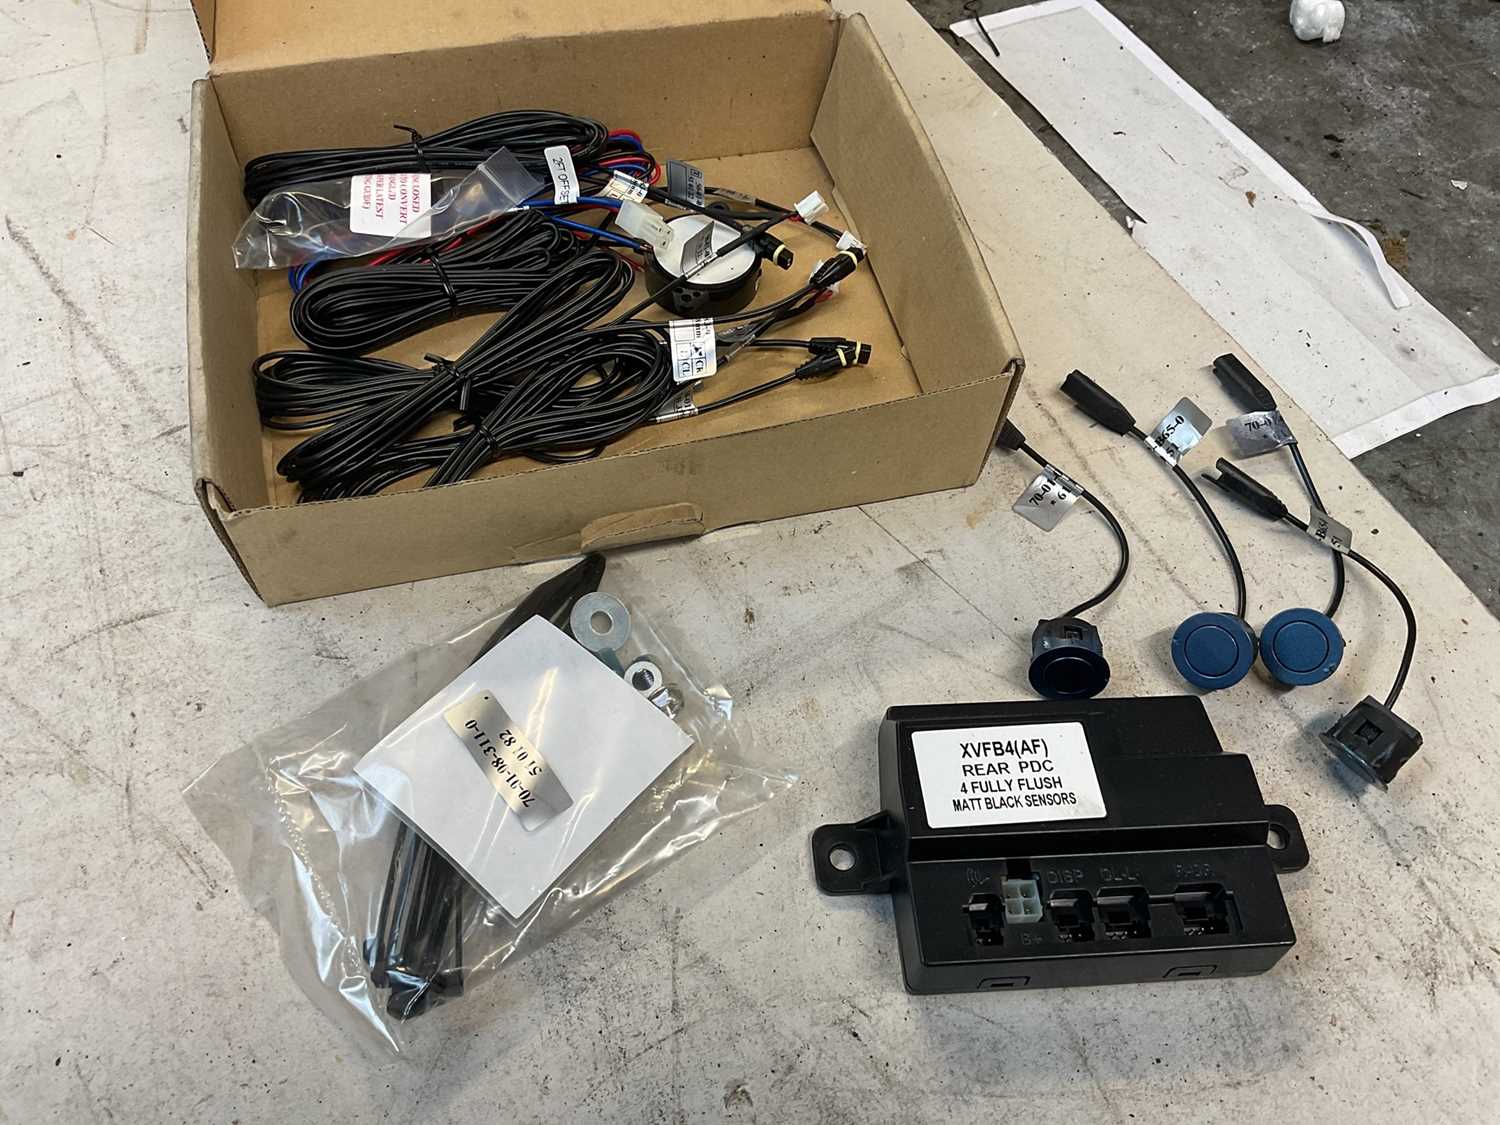 Lot 209 - New and unused aftermarket parking sensor kit.